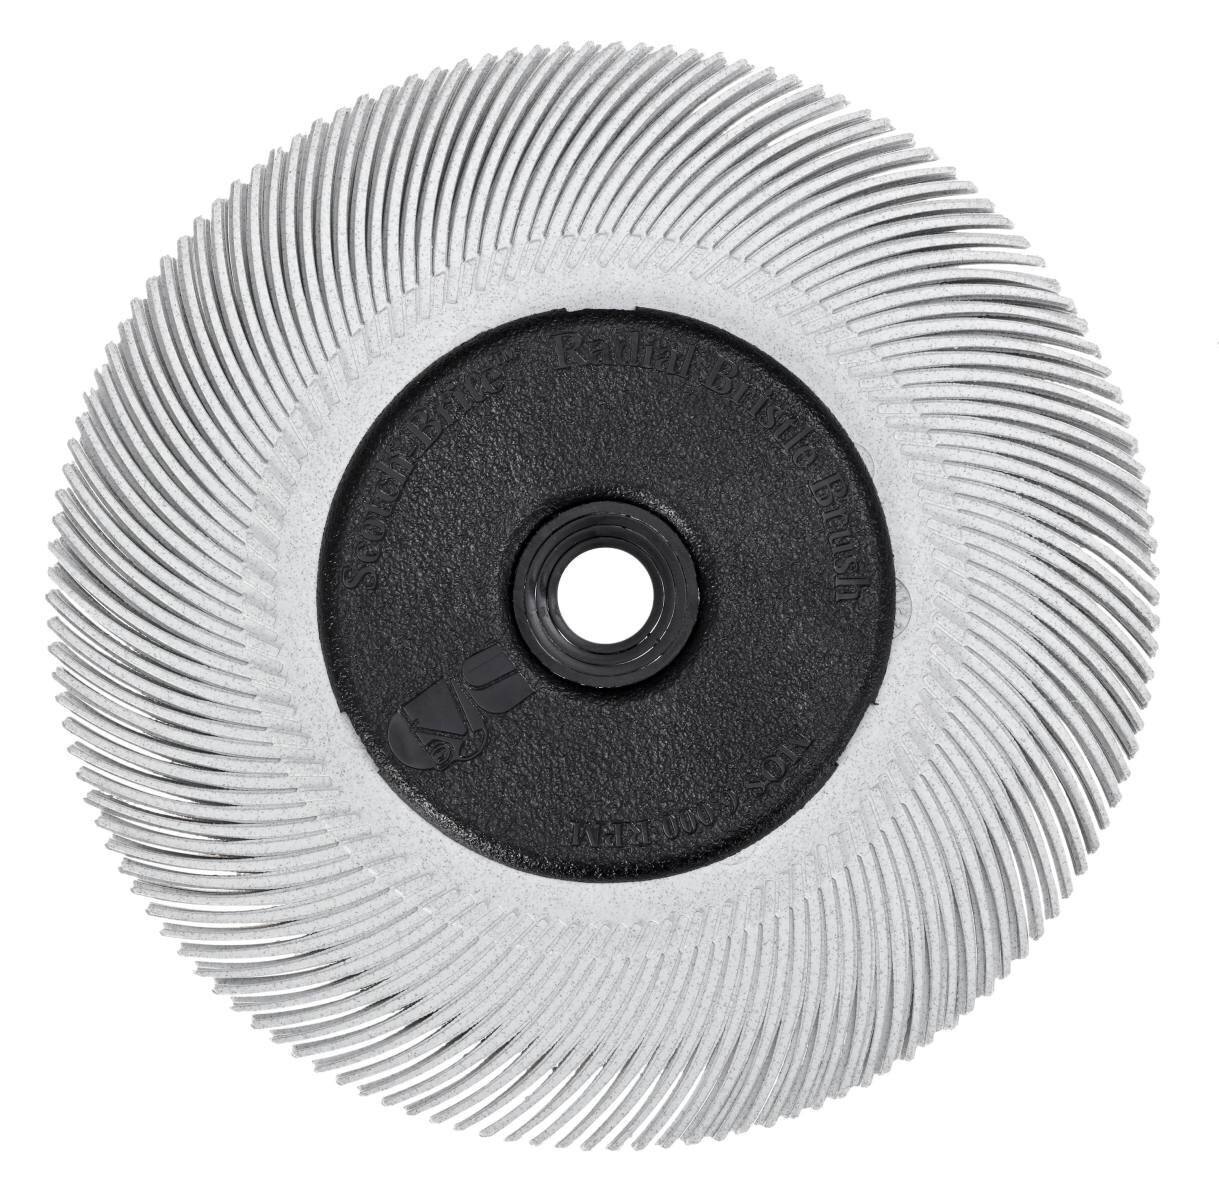 3M Scotch-Brite Radial Bristle Disc BB-ZB avec bride, blanc, 193,5 mm, P120, type C #33130